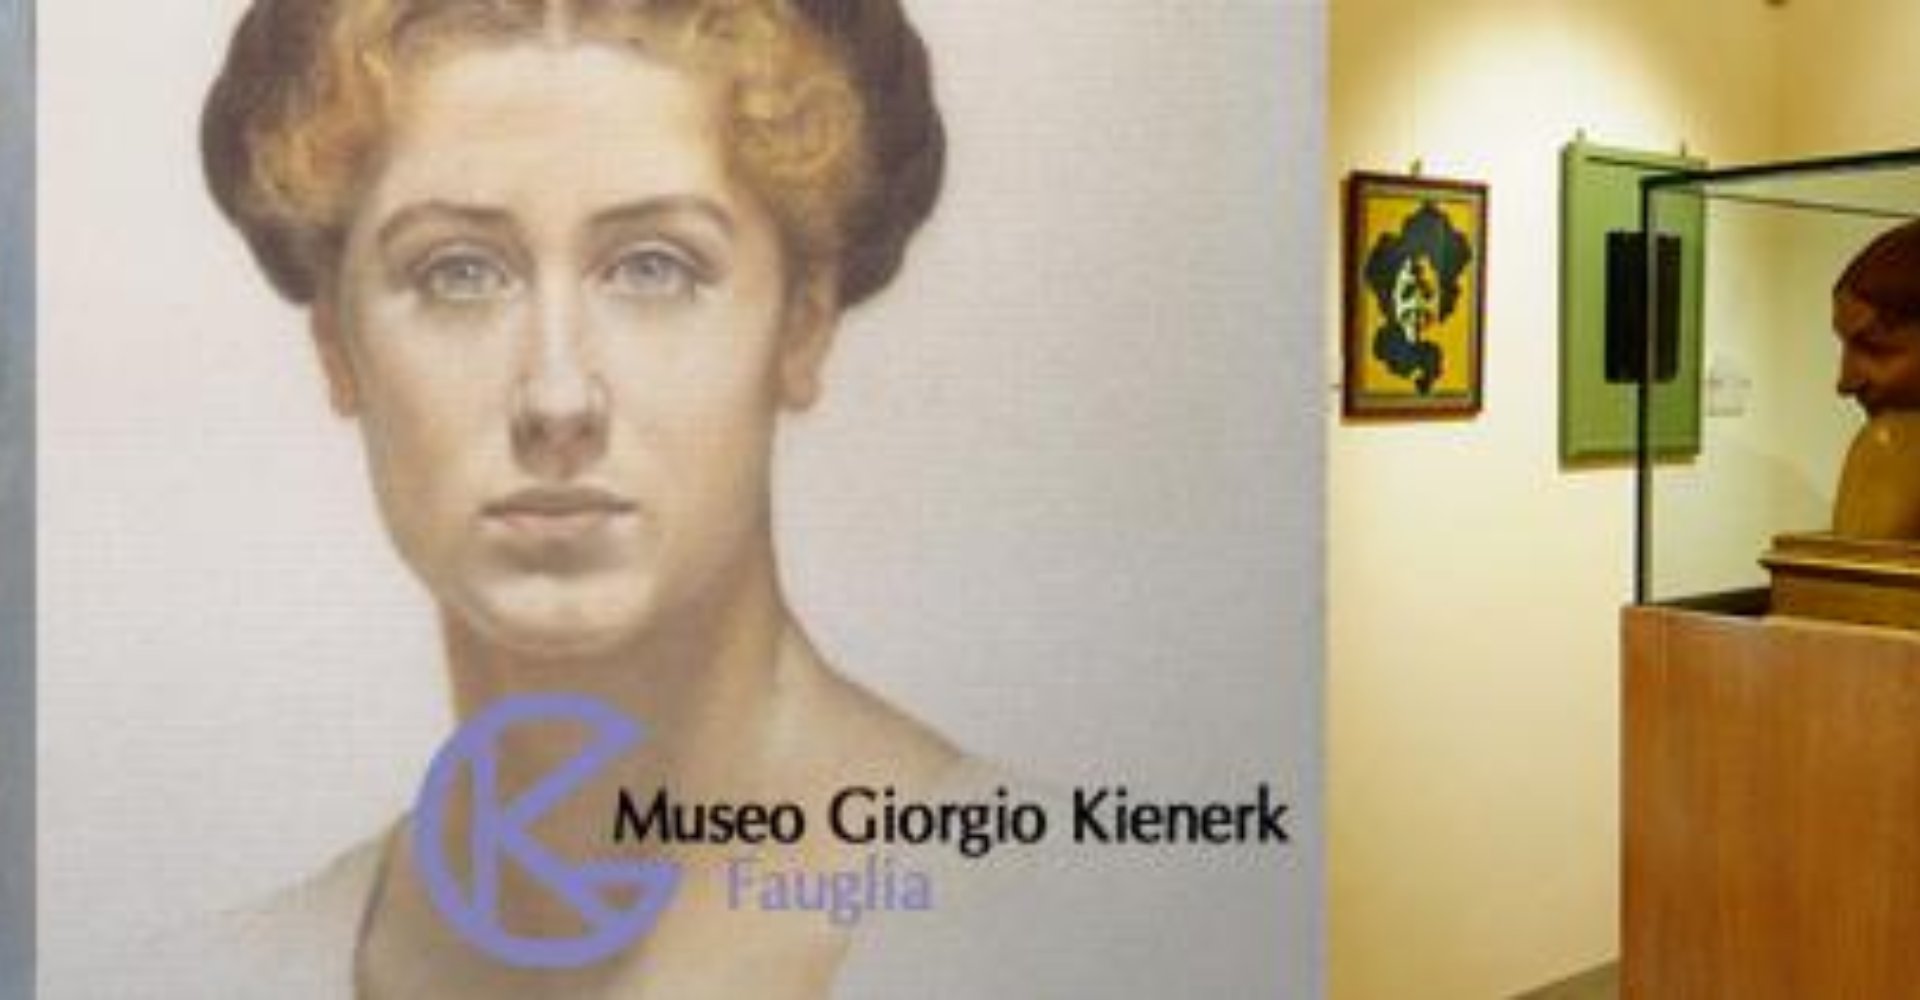 Museo-Giorgio-Kienerk